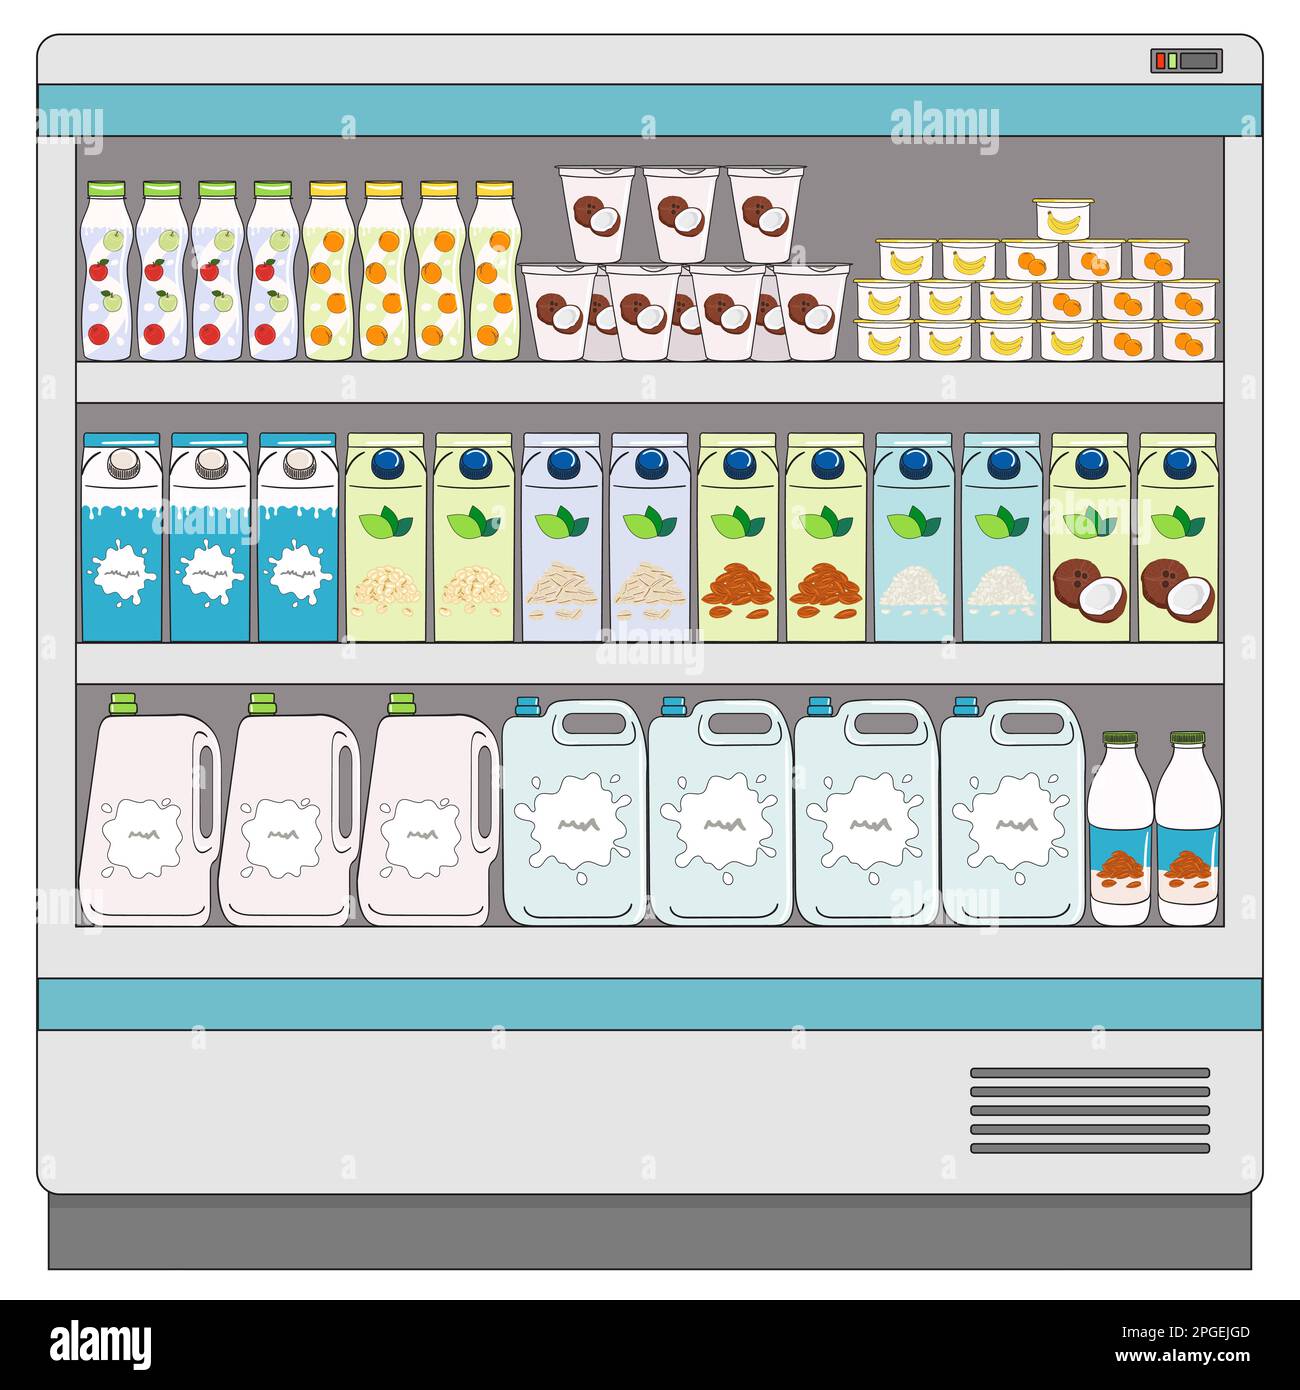 Showcase fridge for cooling milk products. Dairy and vegan milk alternatives on fridge shelves in supermarket. Milk bottles, carton boxes, yogurt. Mil Stock Vector